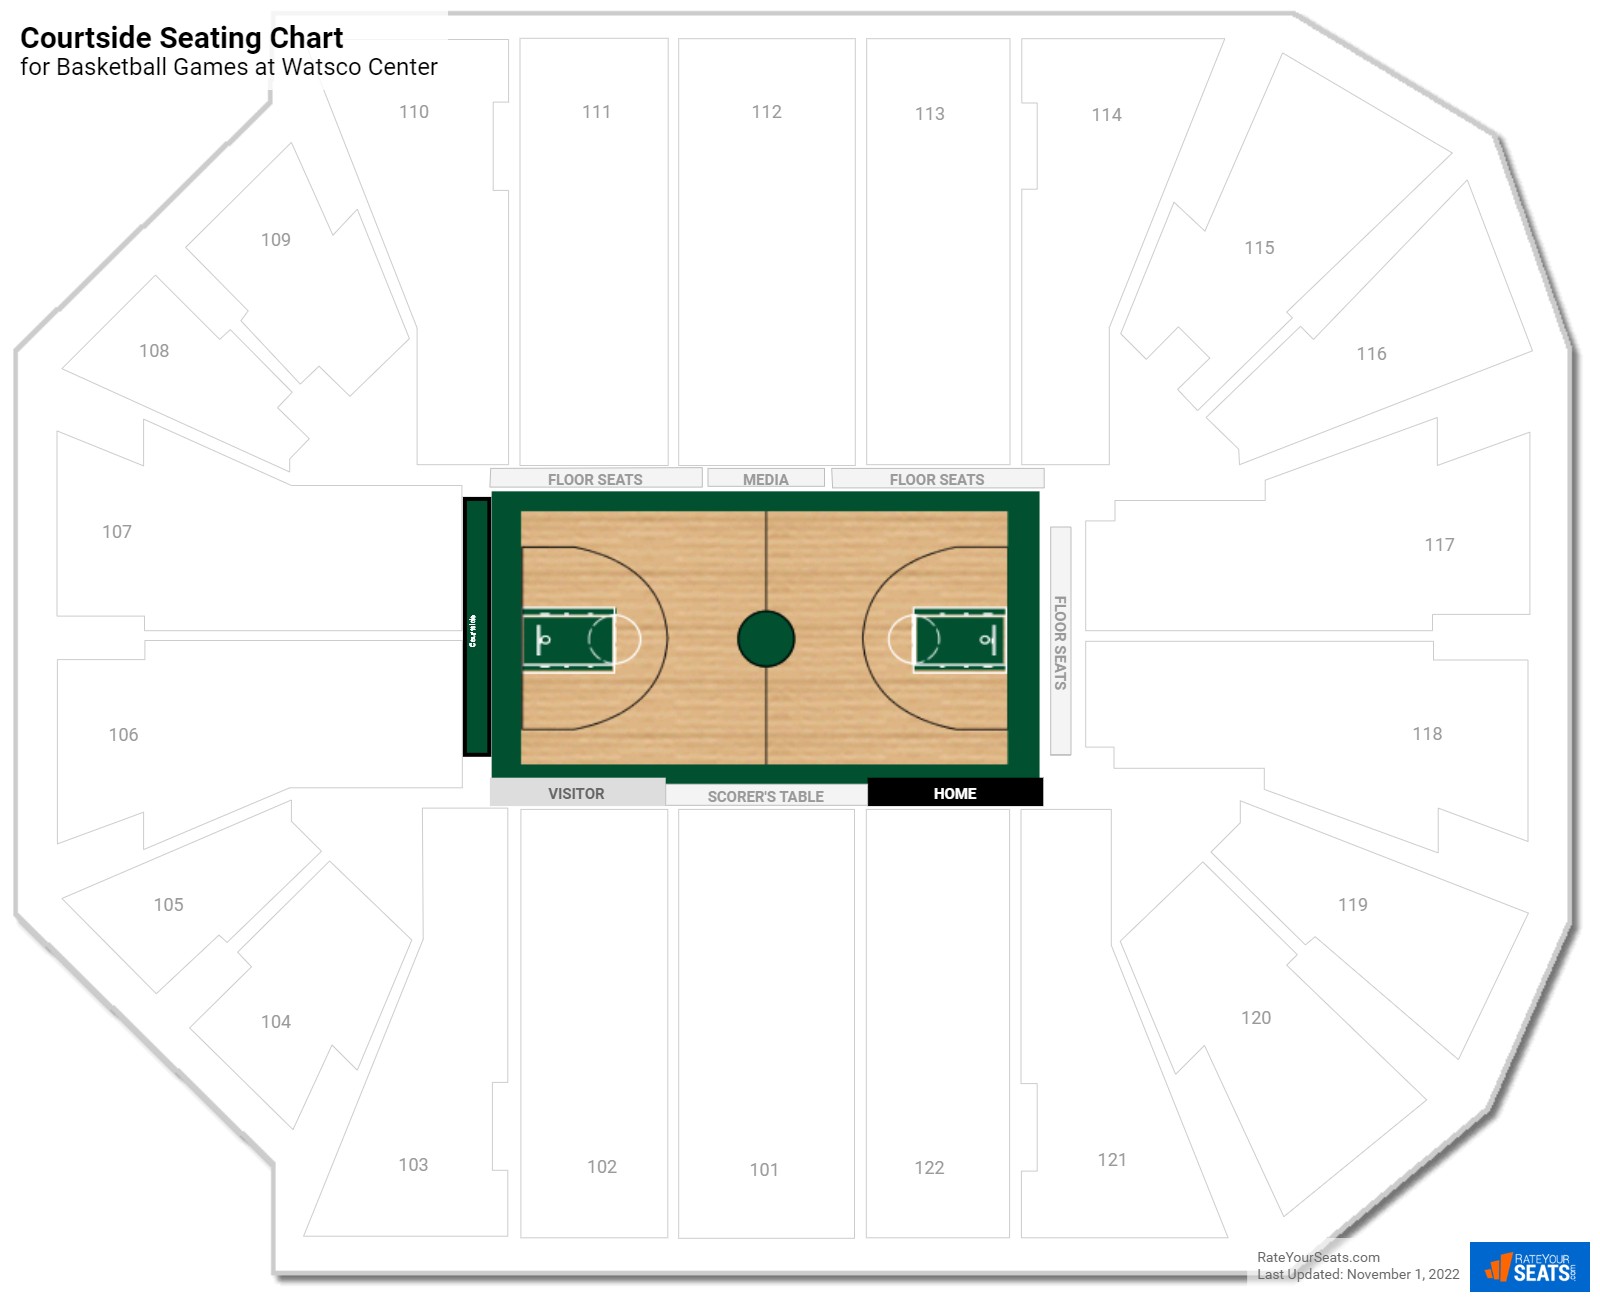 Basketball Courtside Seating Chart at Watsco Center